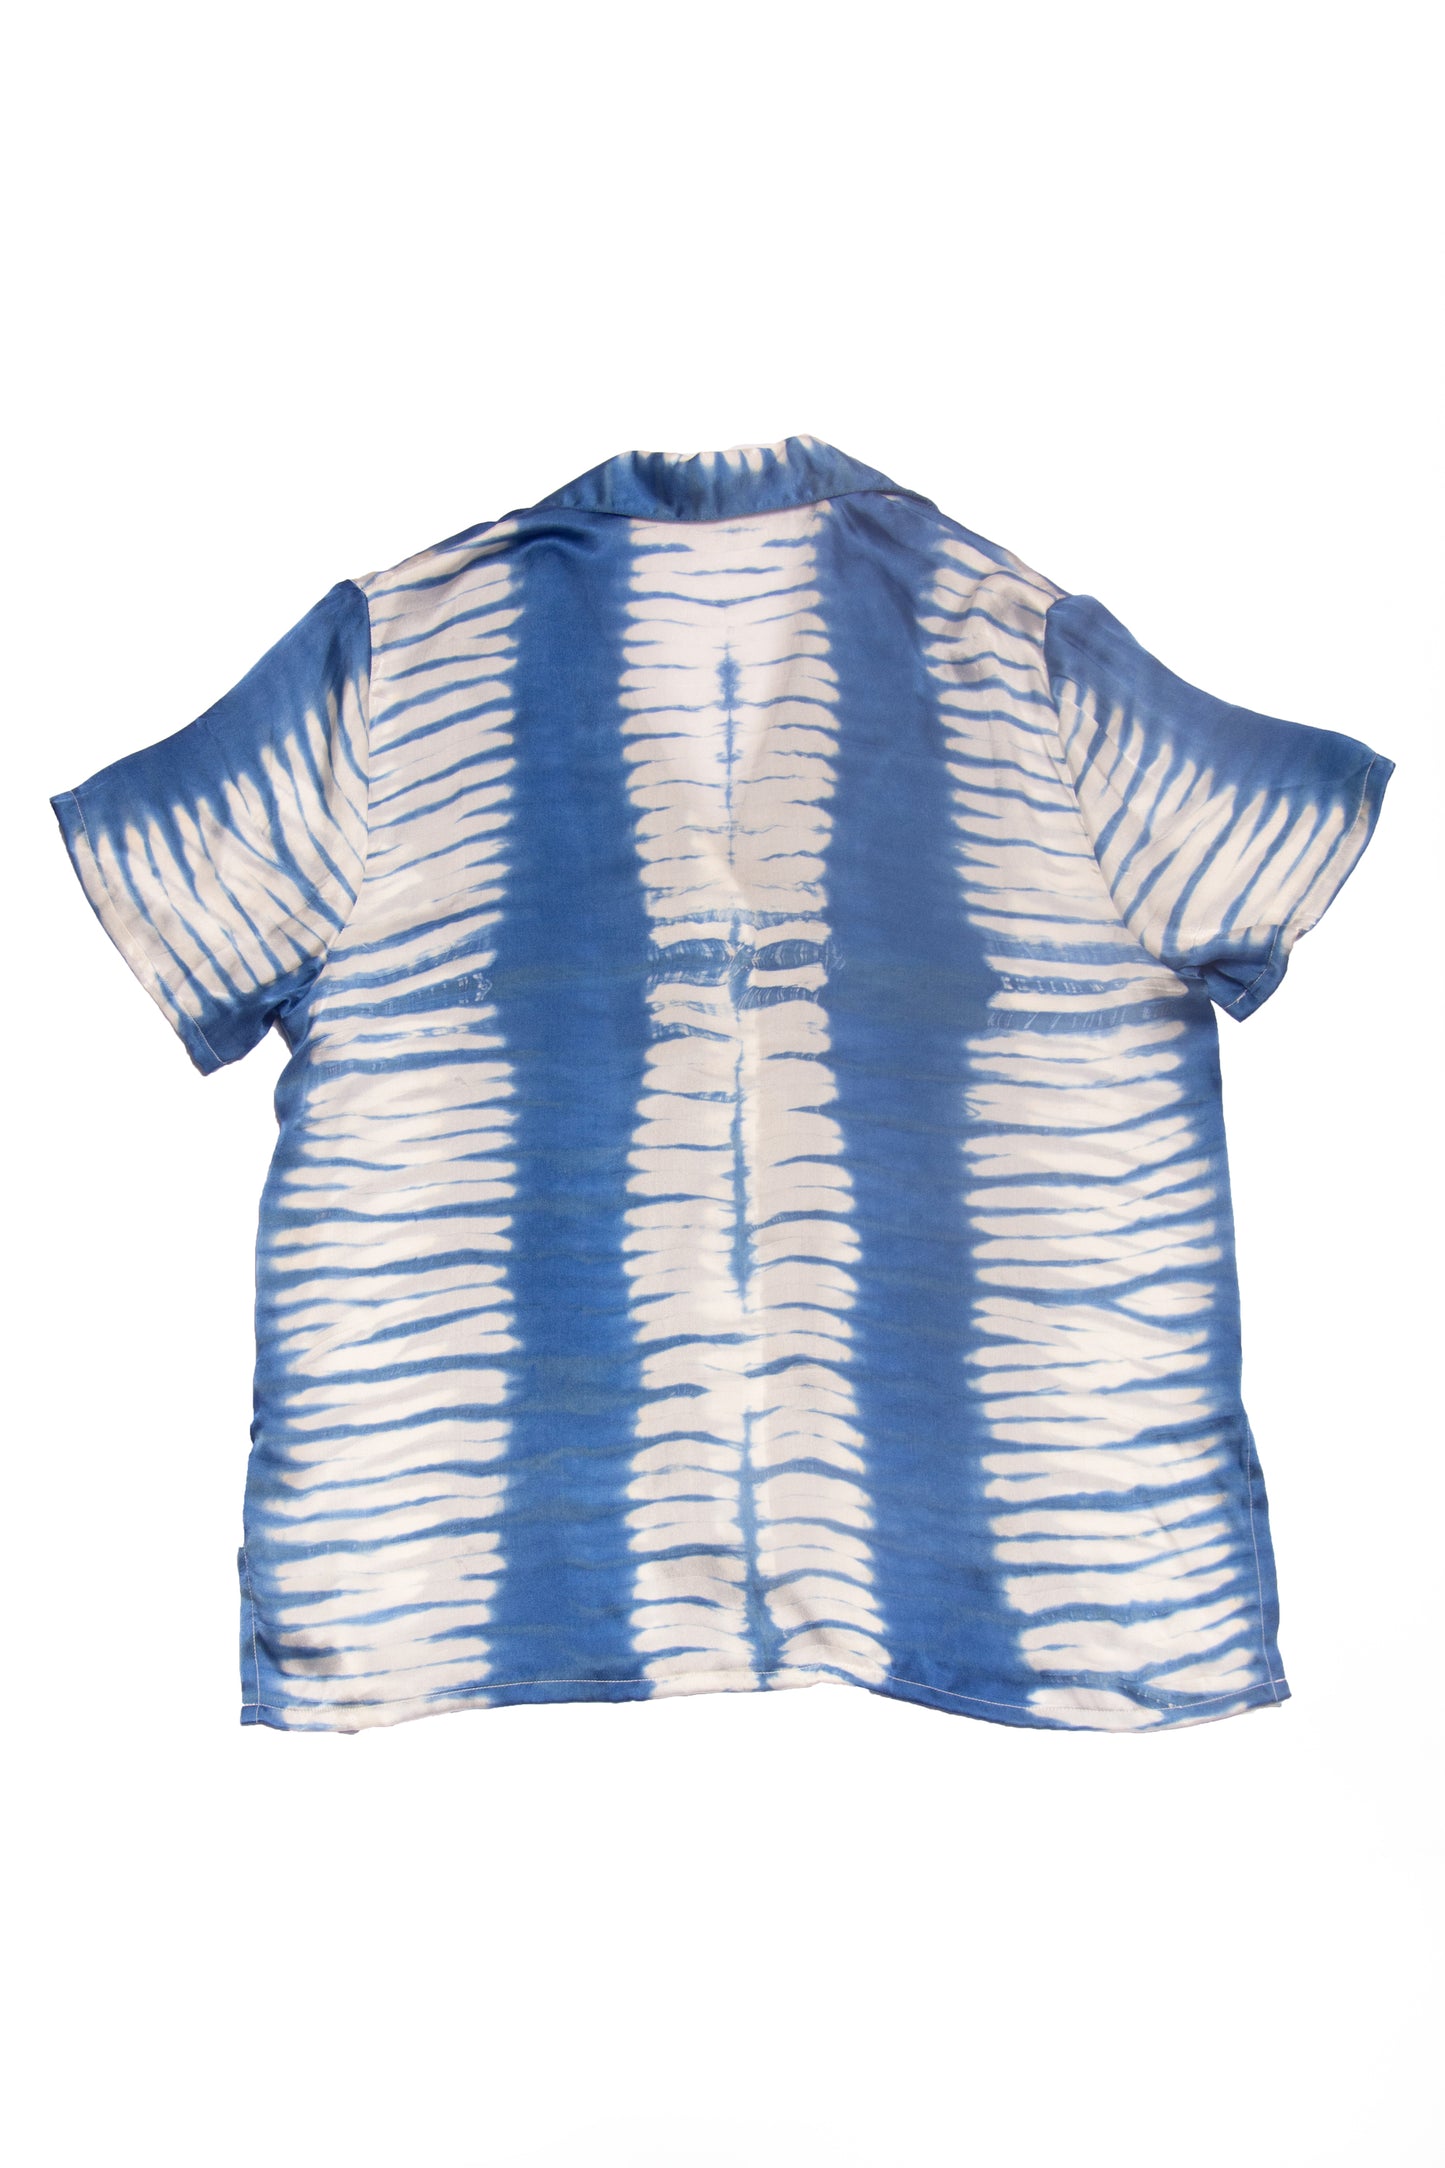 Unisex statement silk tie dye hand made shirt made in Indonesia Designed in Australia